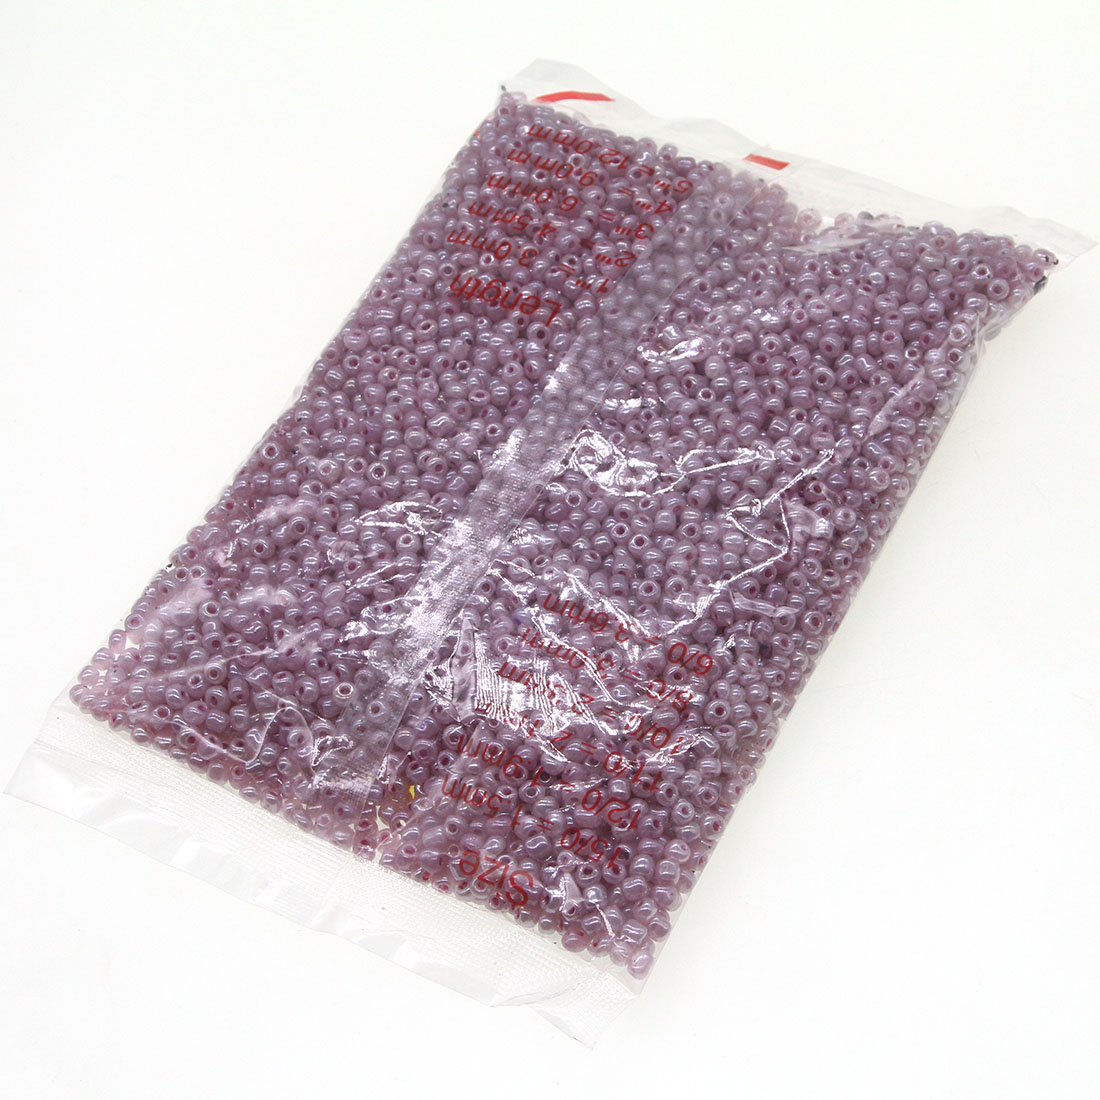 Grape purple 4mm 4500 packs